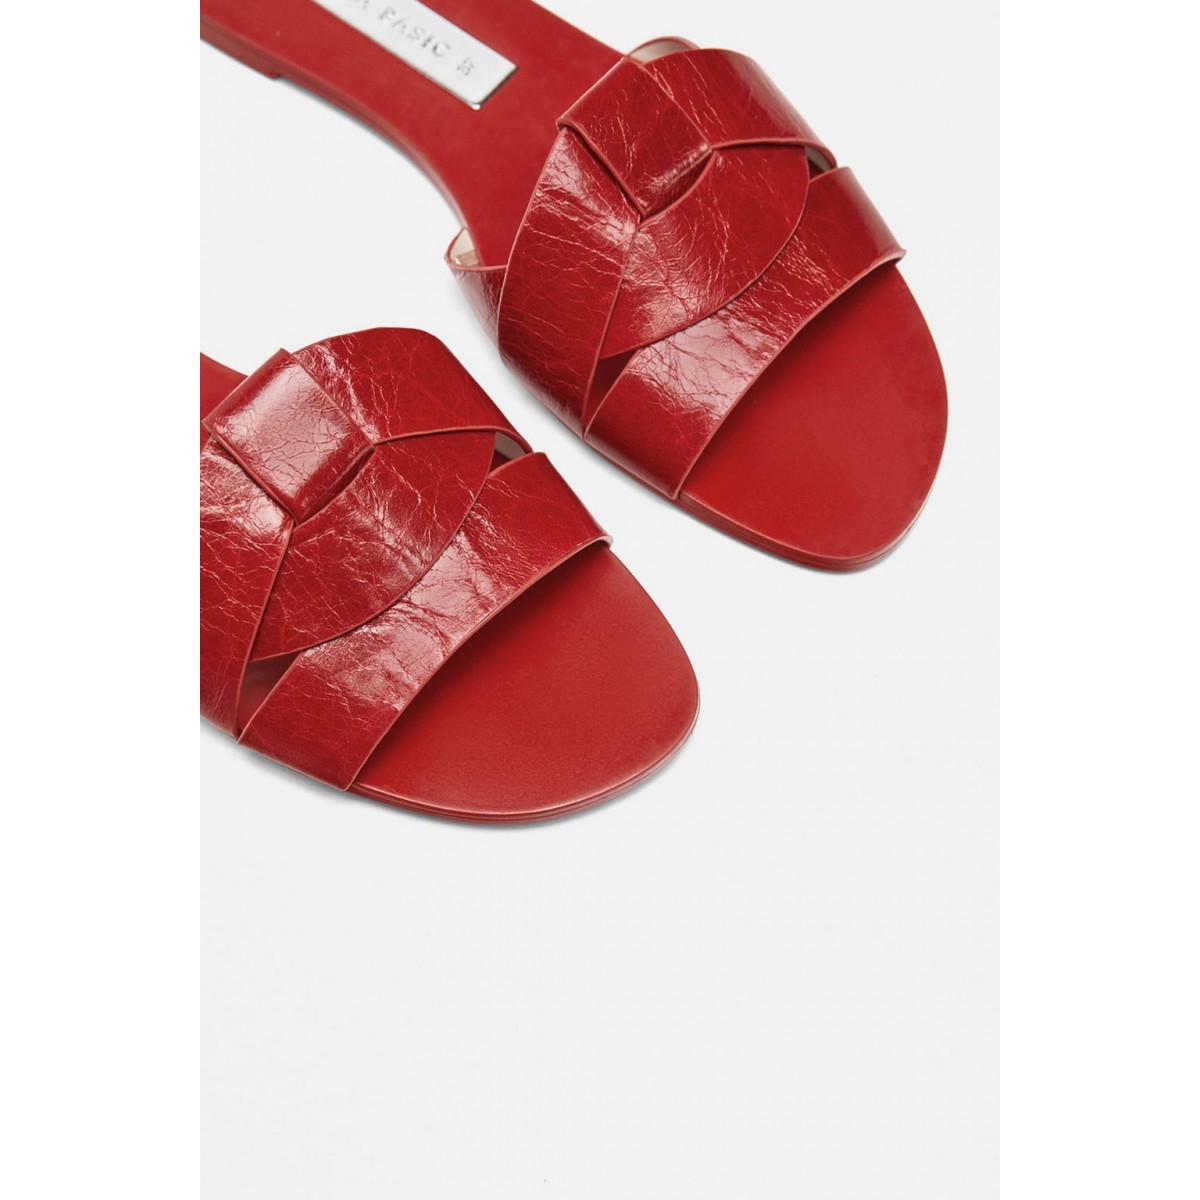 Zara Animal Print Leather Flat Sandals